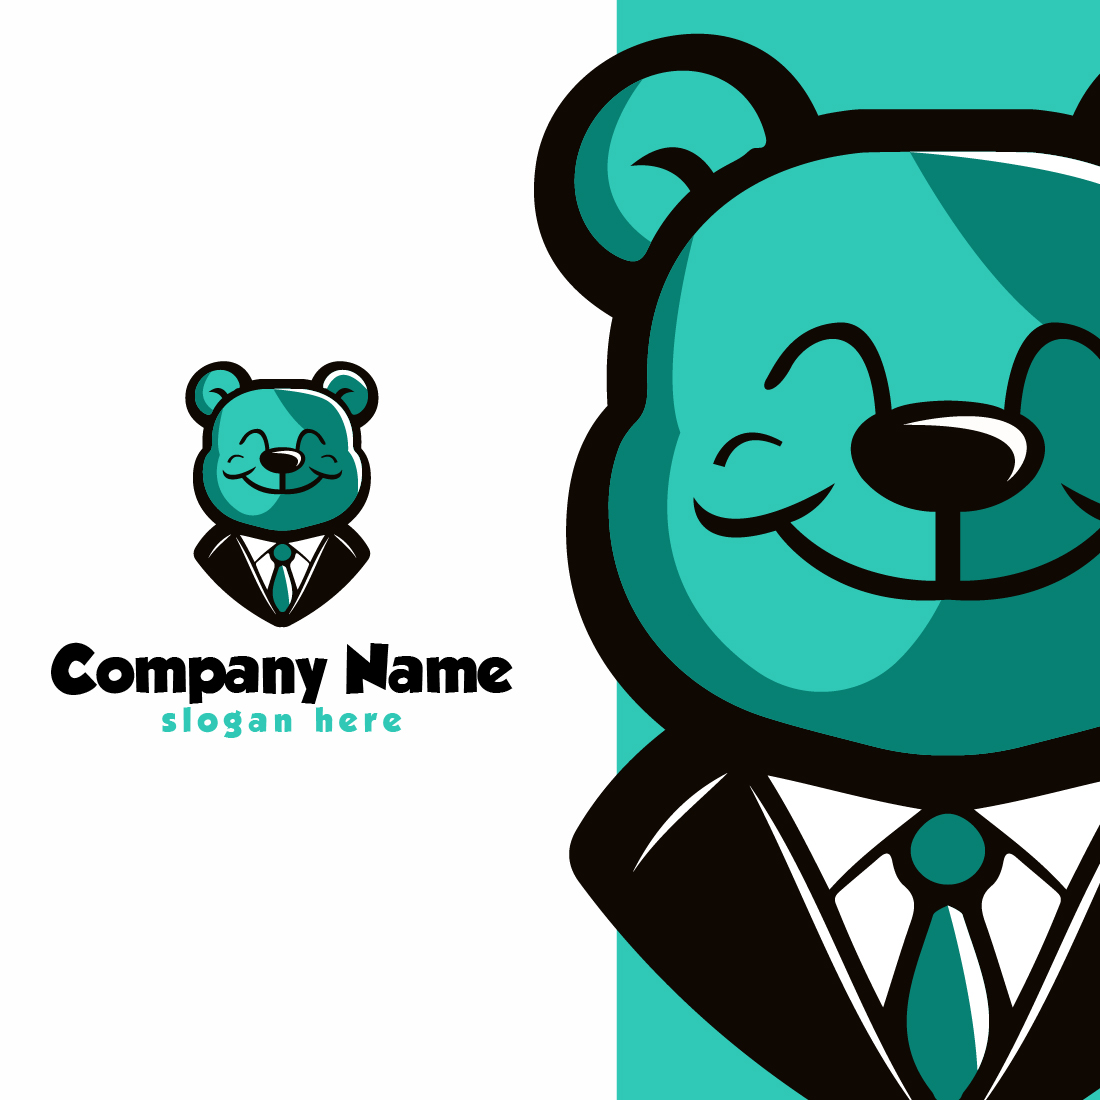 Cute Smiling Bear Mascot logo Template preview image.